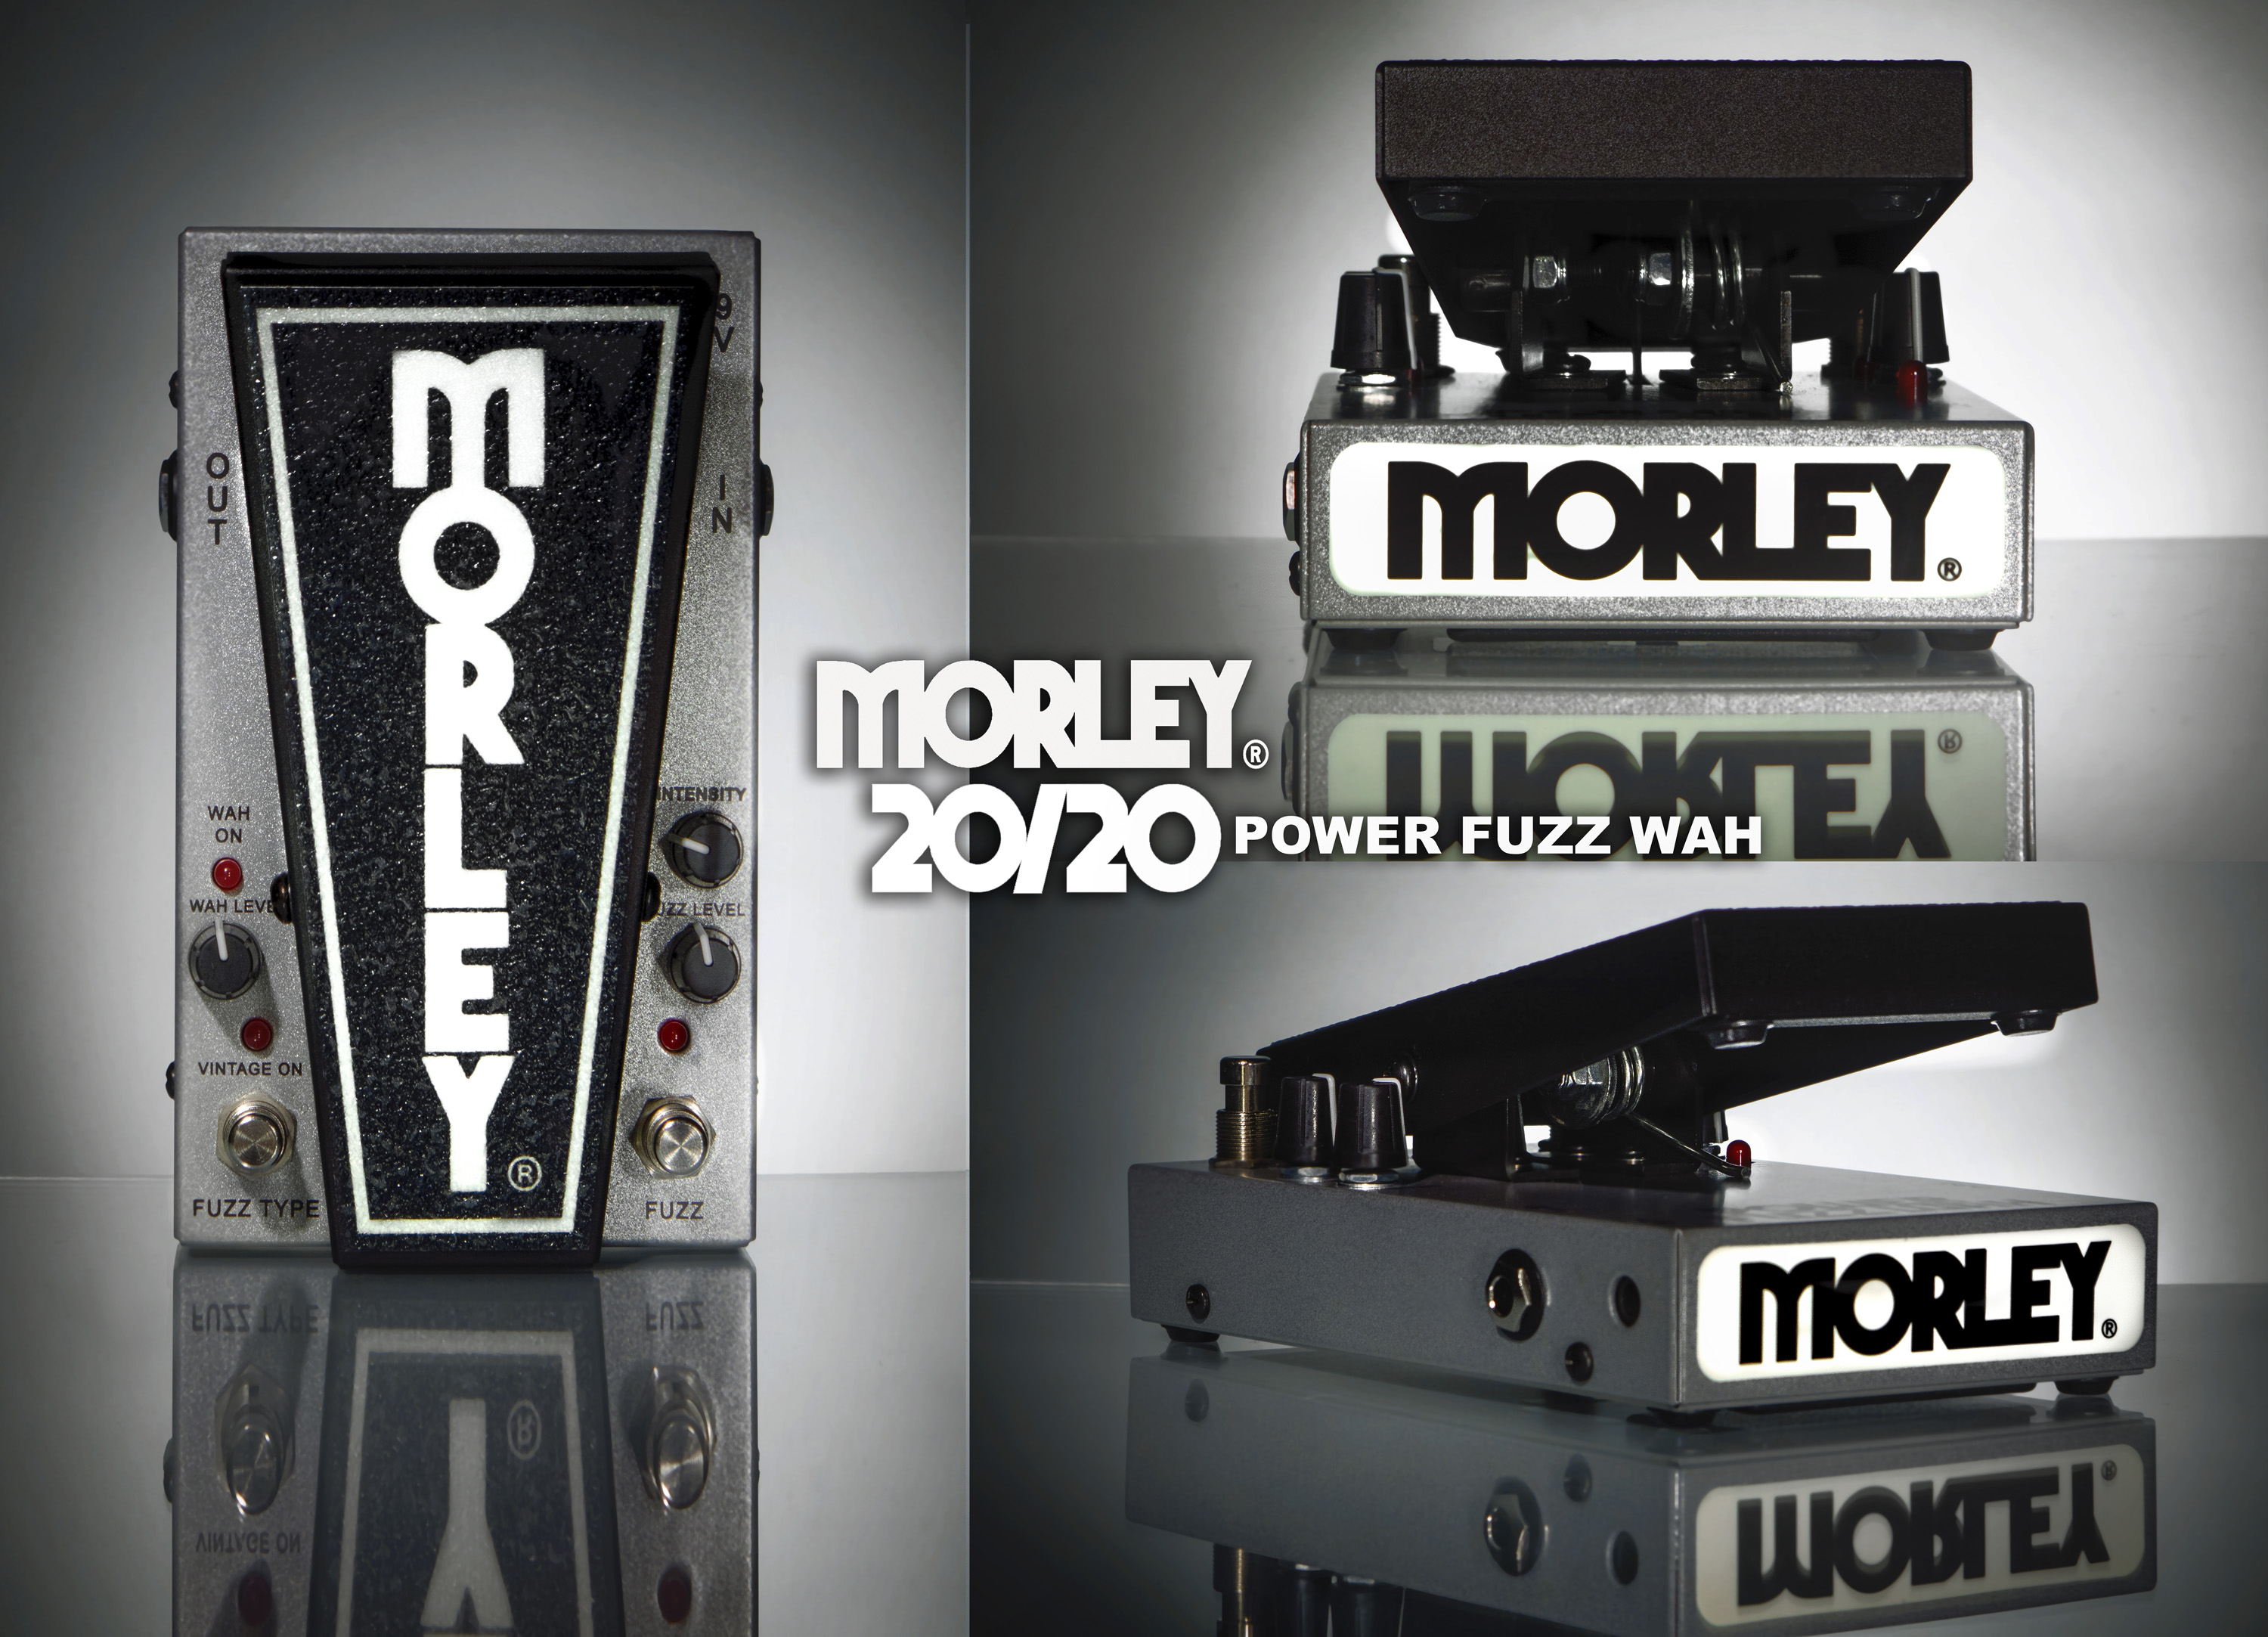 20/20 Power Fuzz Wah – Morley